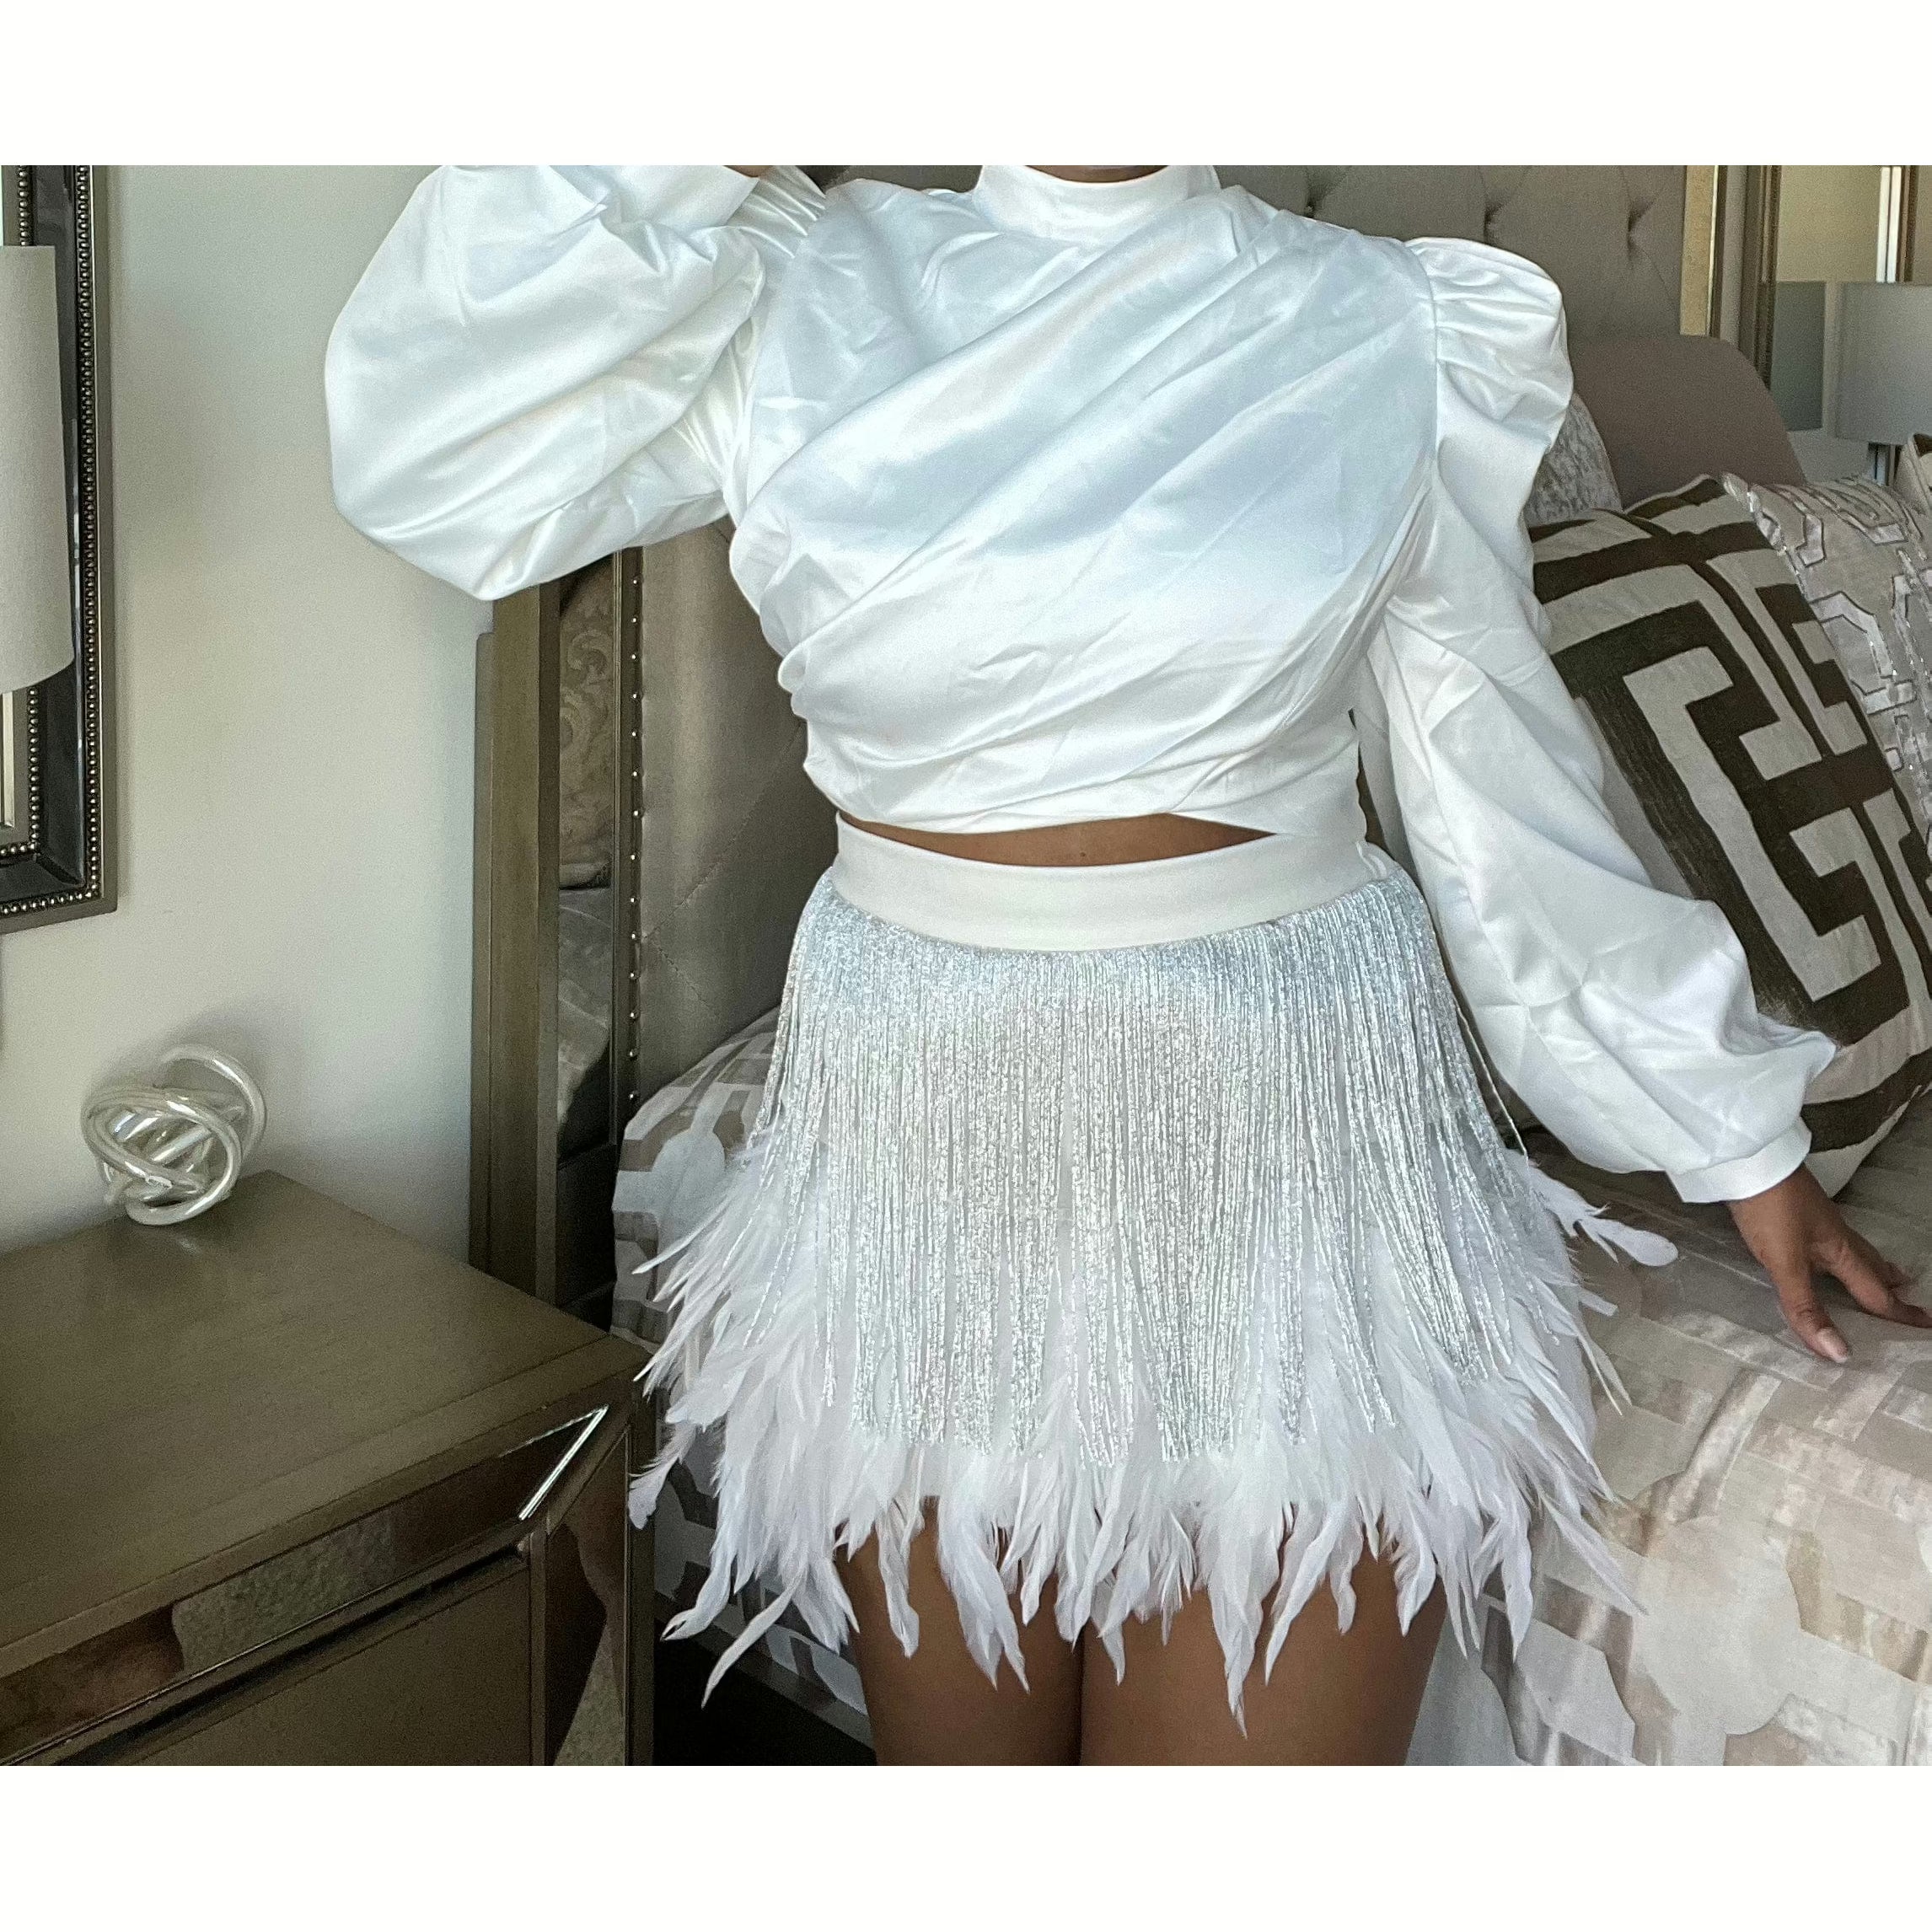 White Feather Skirt